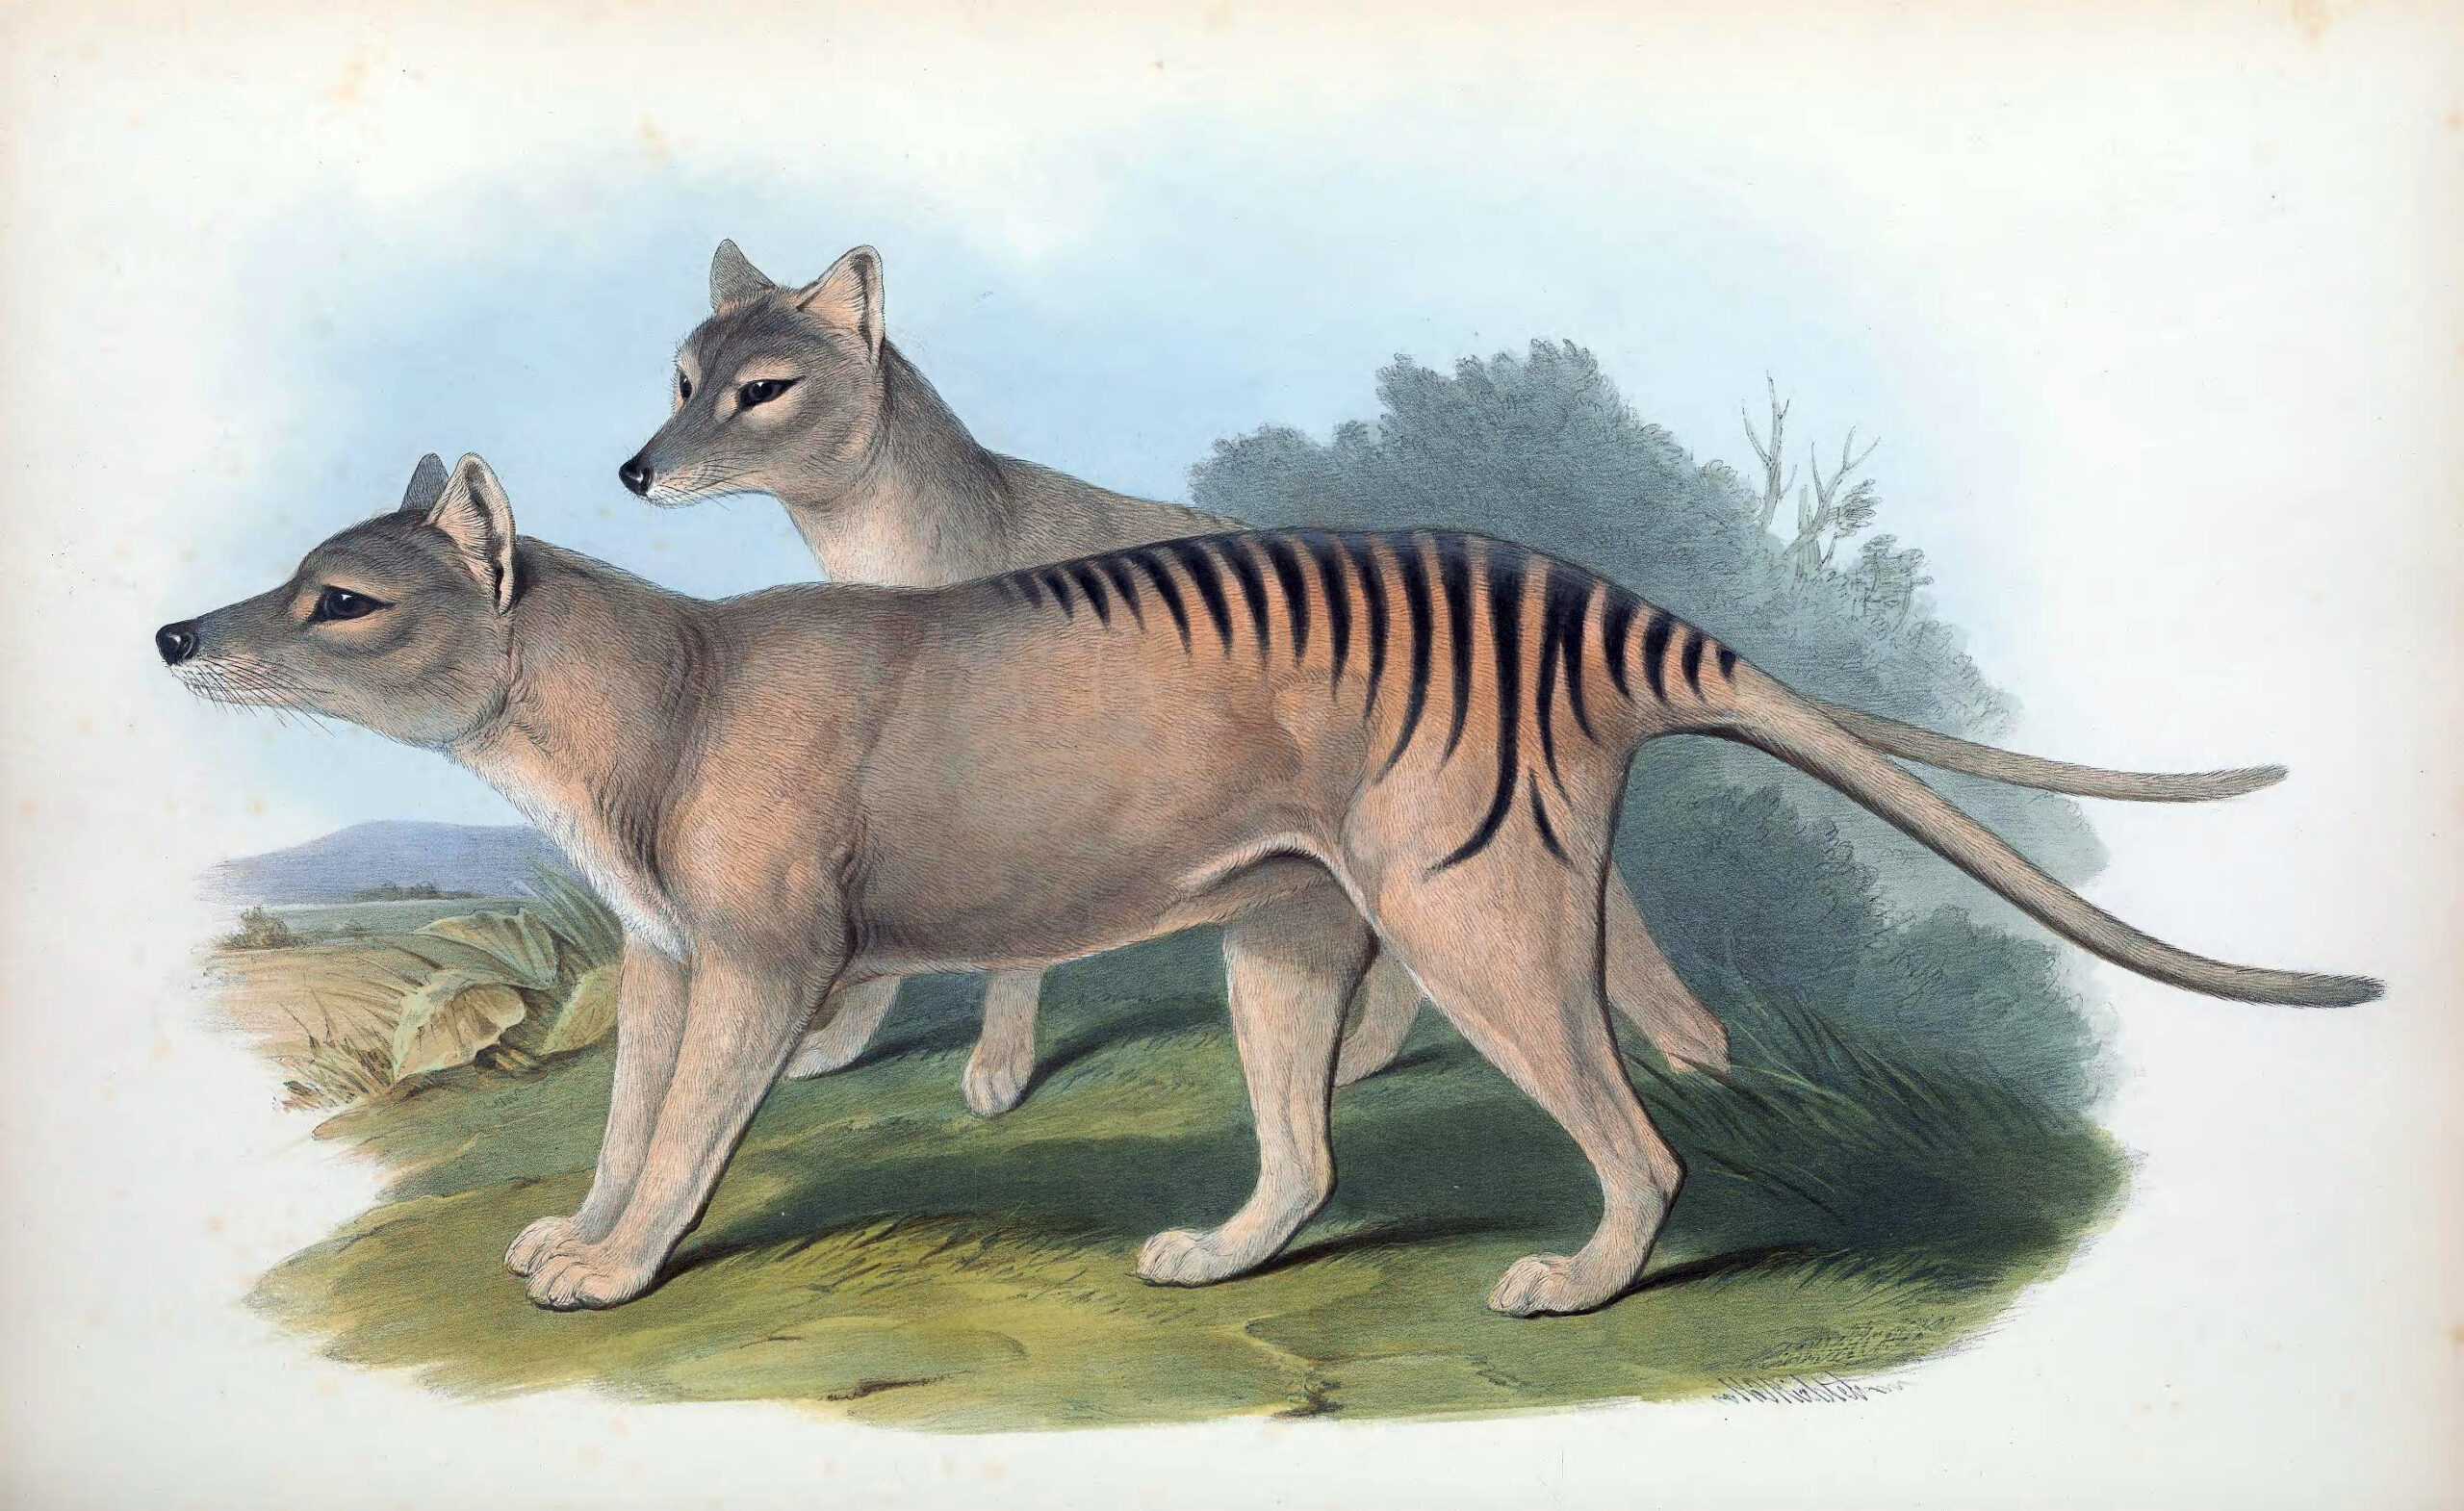 Scientists announce plans to resurrect extinct Tasmanian tiger